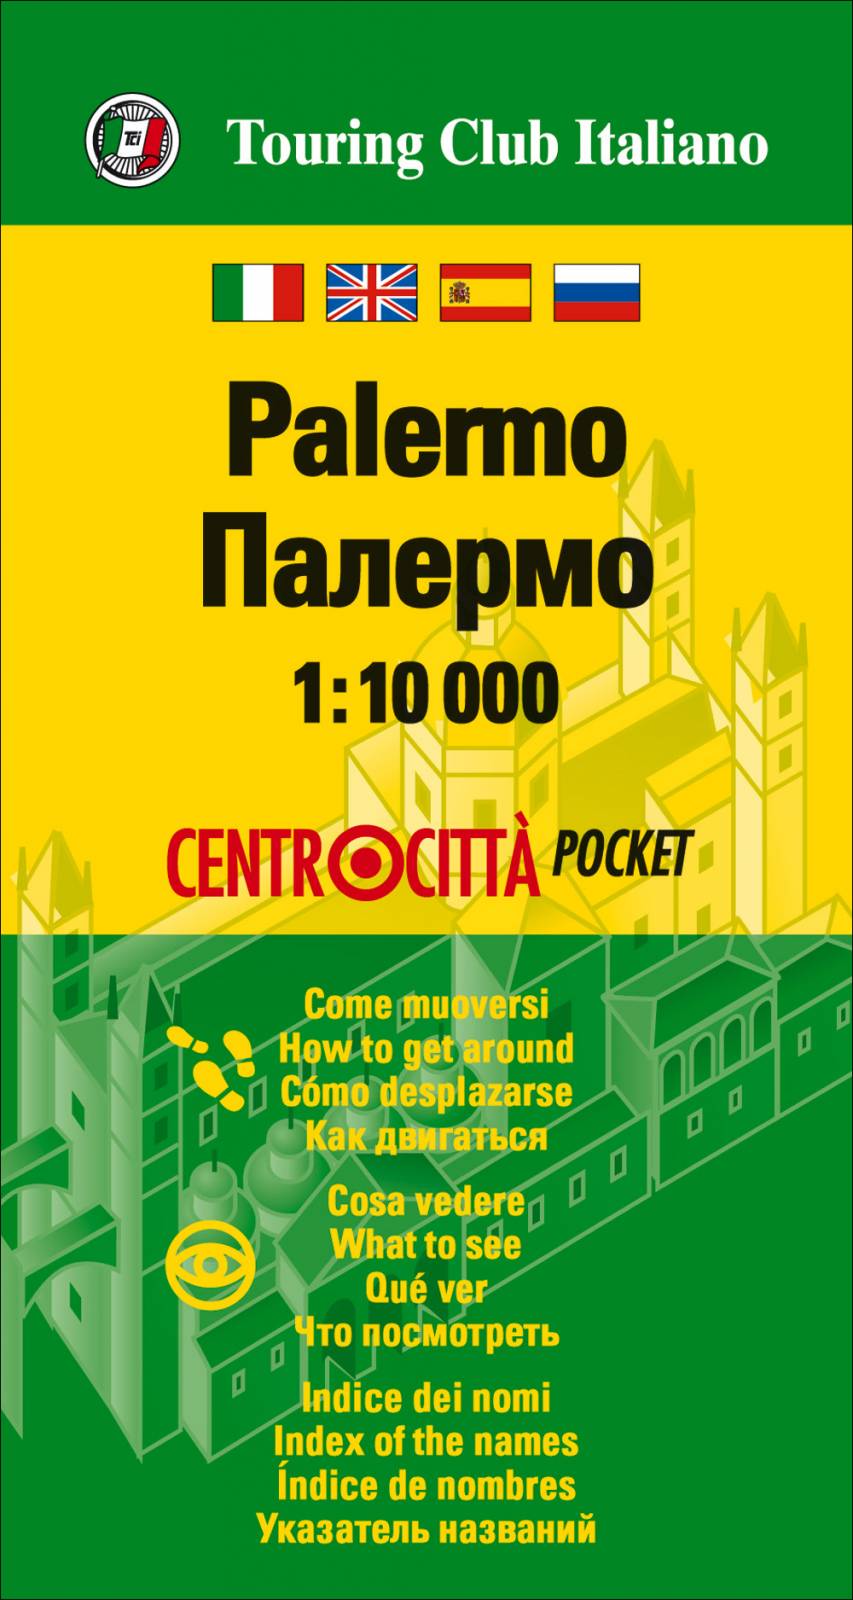 Centrocittà Pocket - Palermo